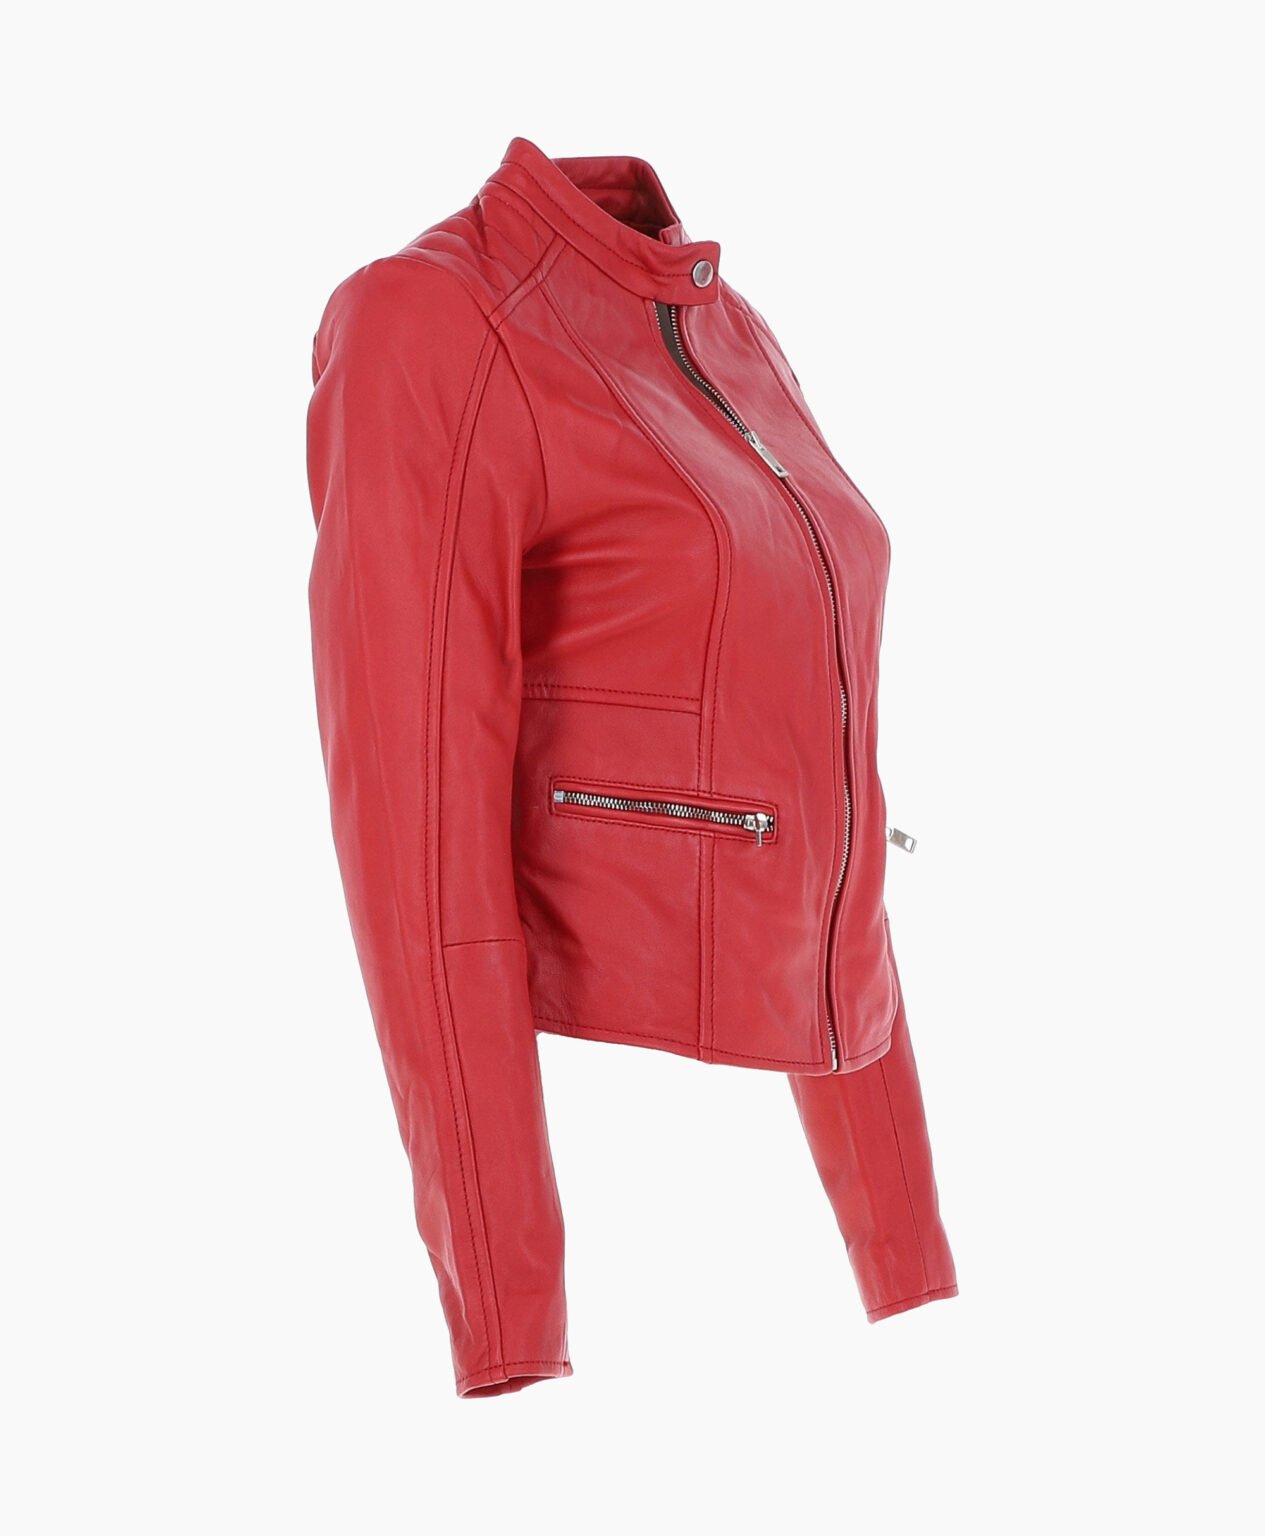 vogue-jacket-leather-biker-jacket-red-ontario-image203